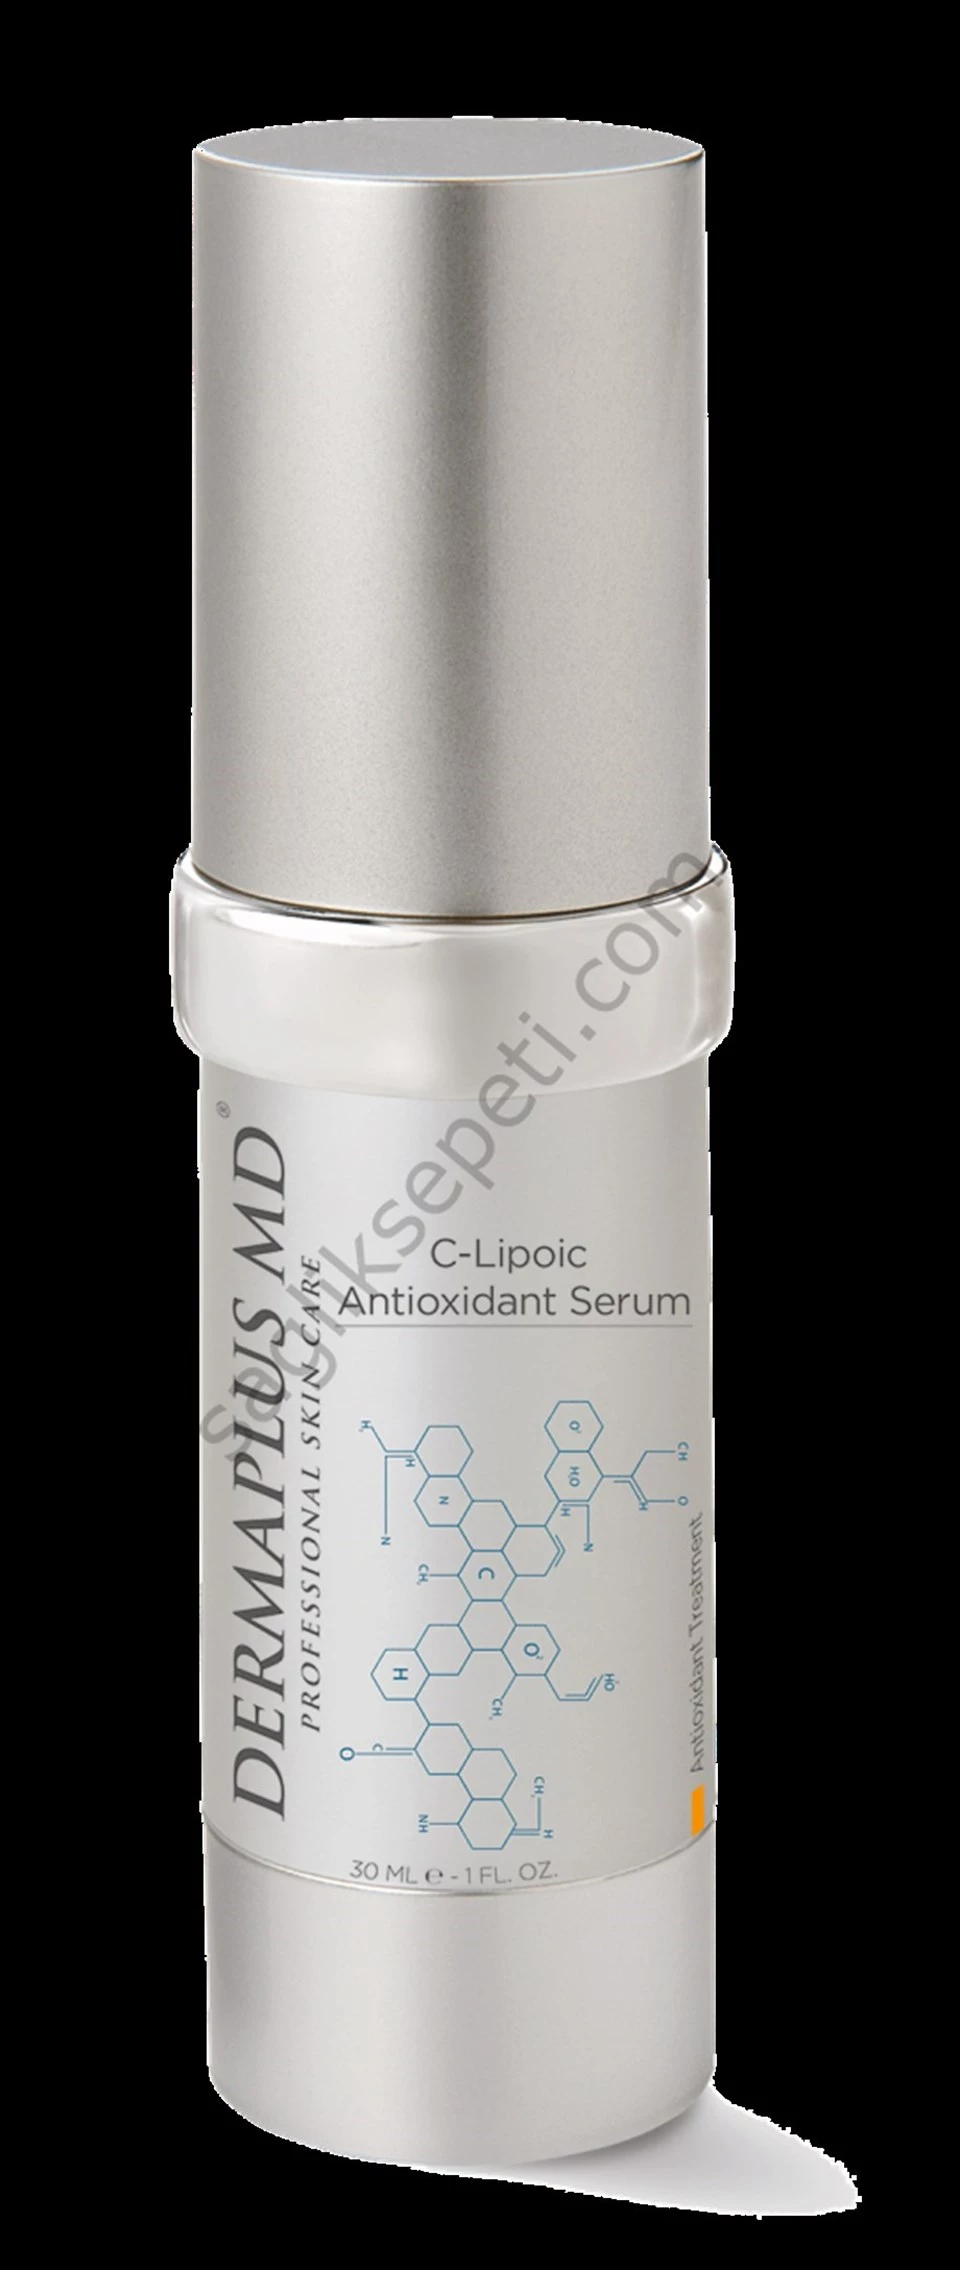 DermaPlus Md C-Lipoic Antioxidant Serum 28.3g